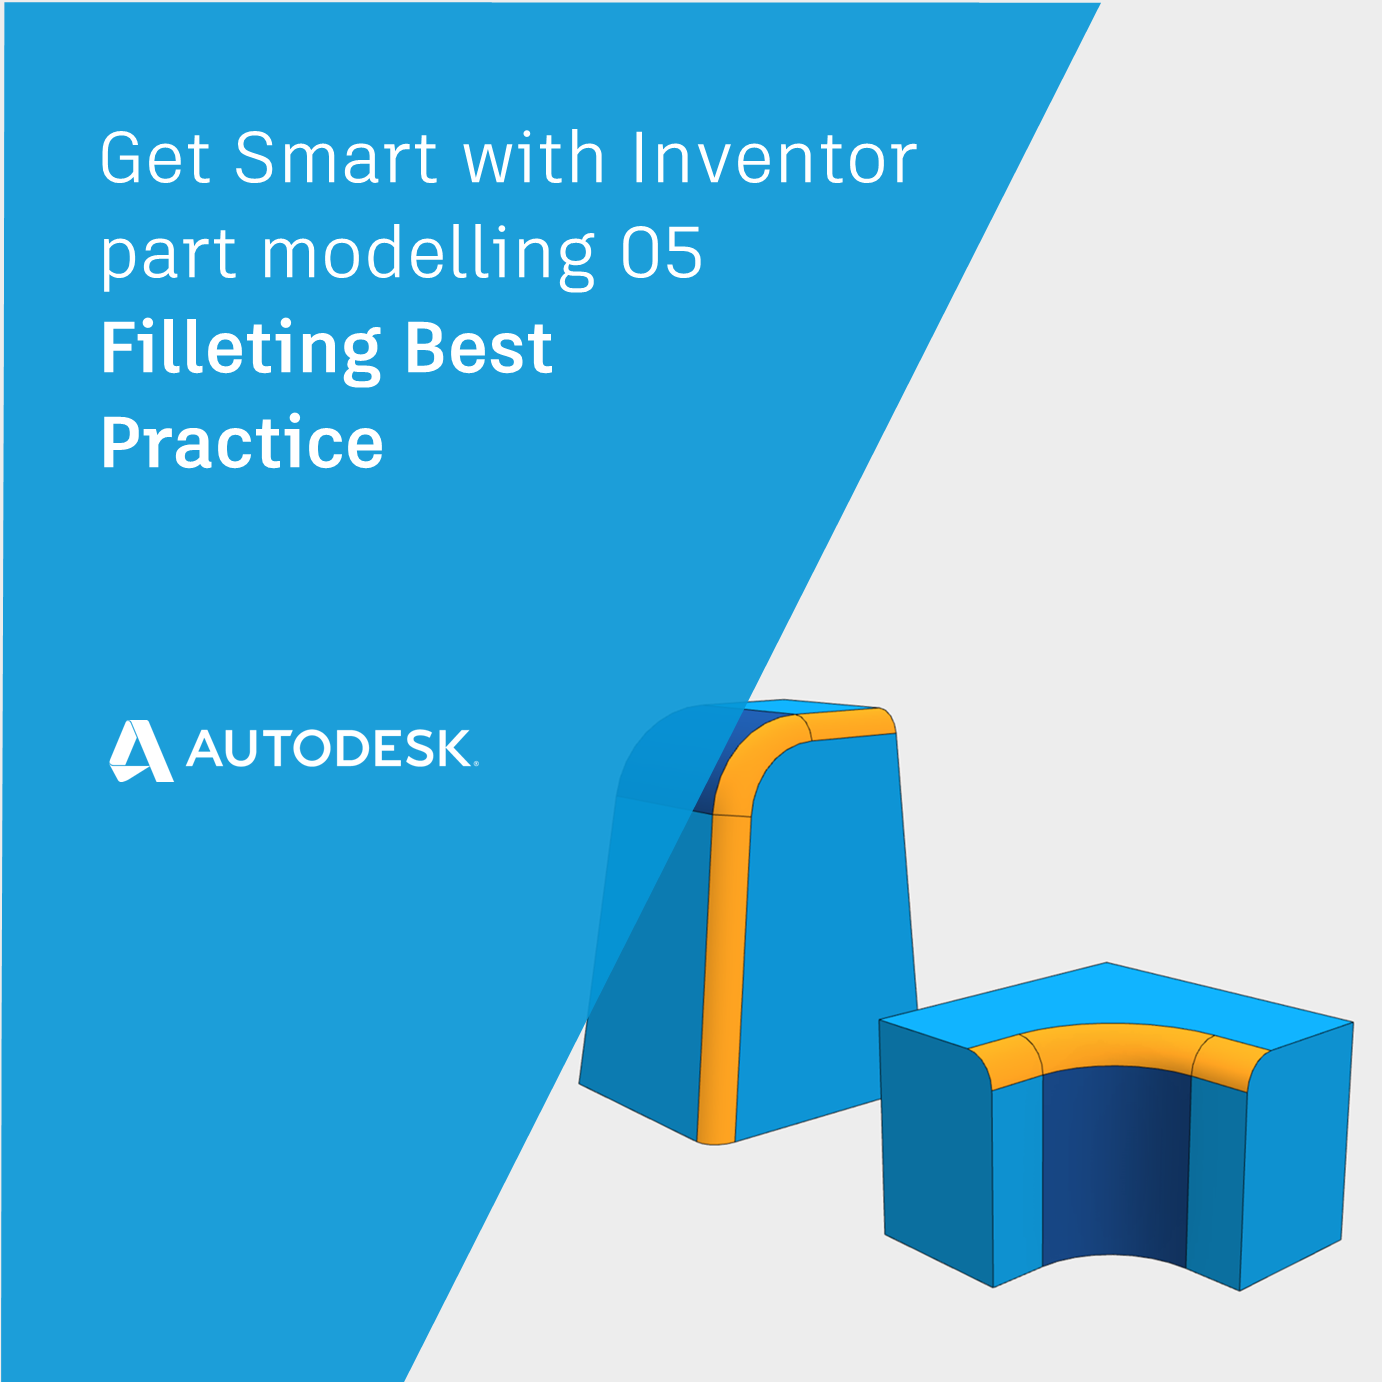 Filleting best practice | Get Smart with Inventor Part Modeling 05